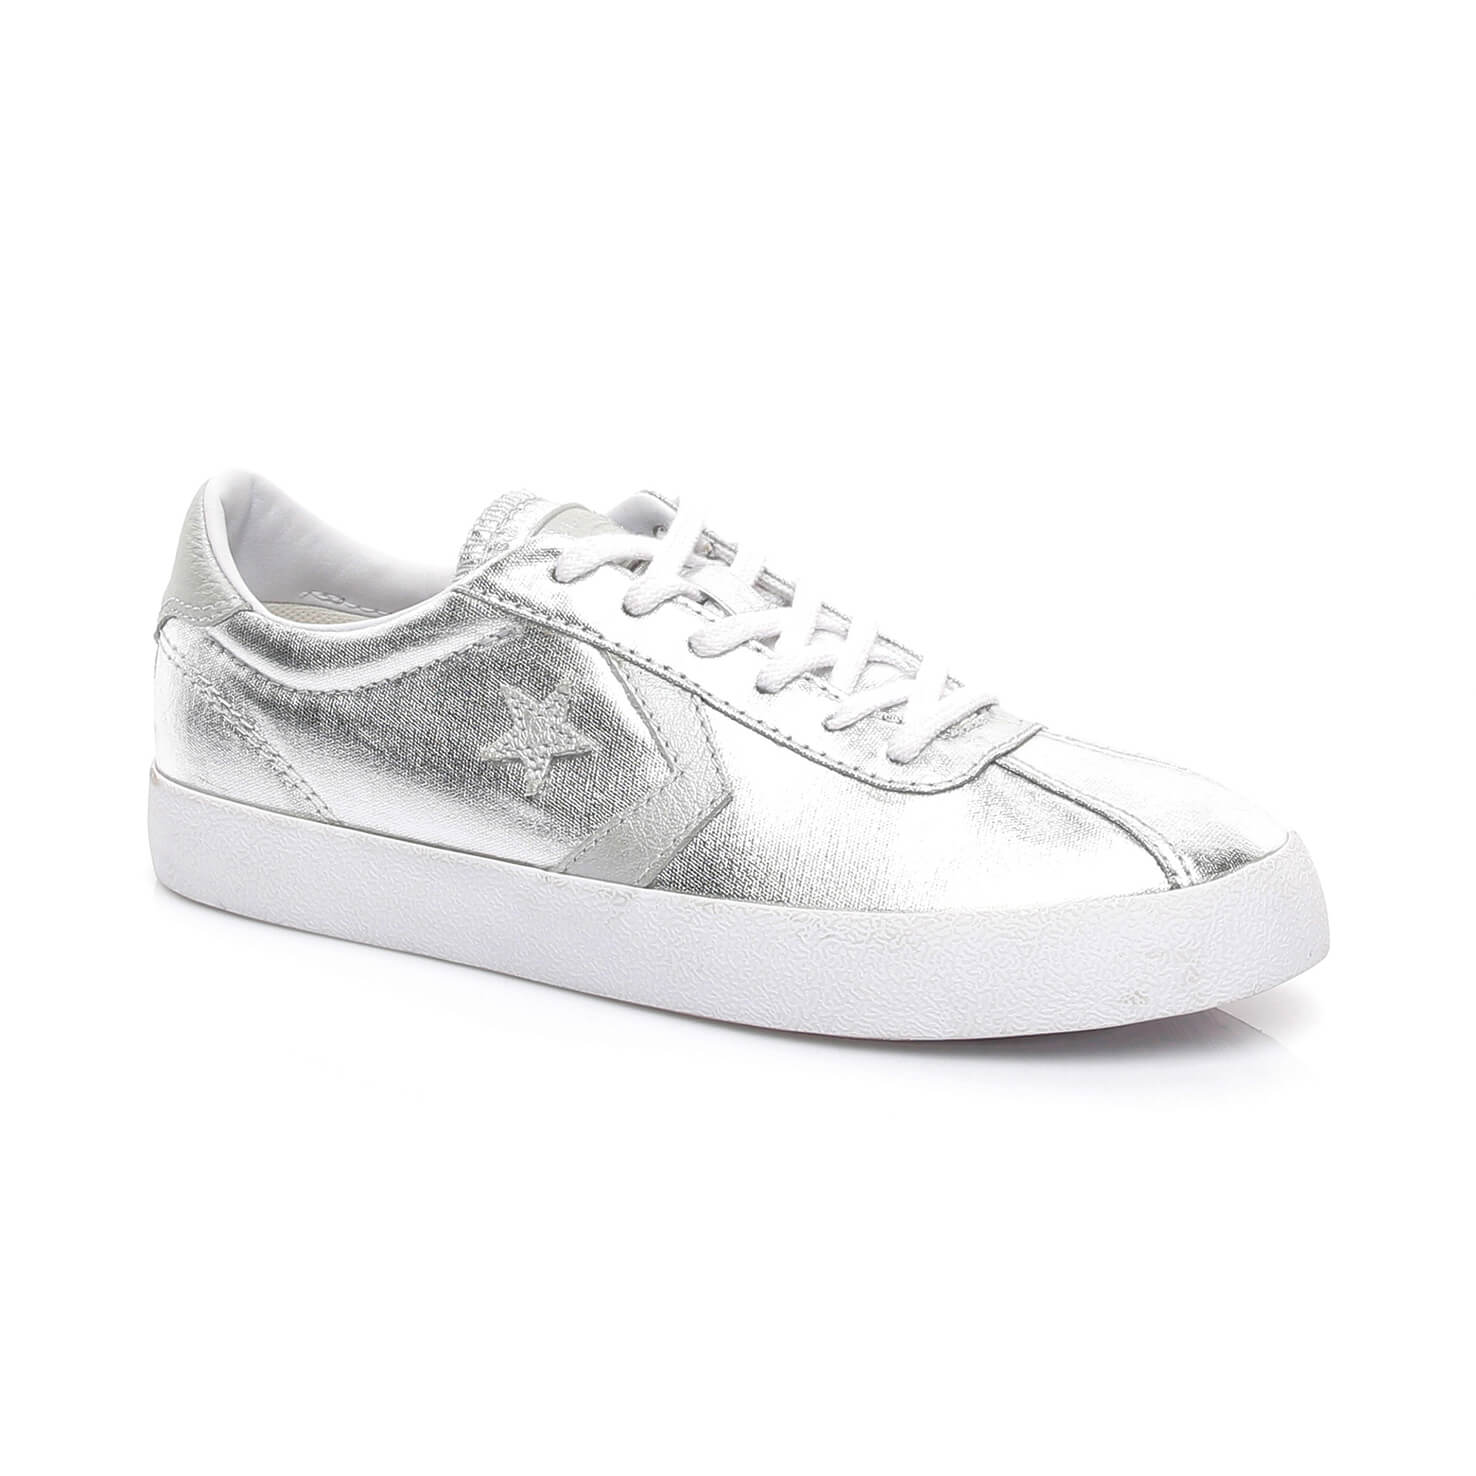 Converse Breakpoint Kadın Gümüş Sneaker